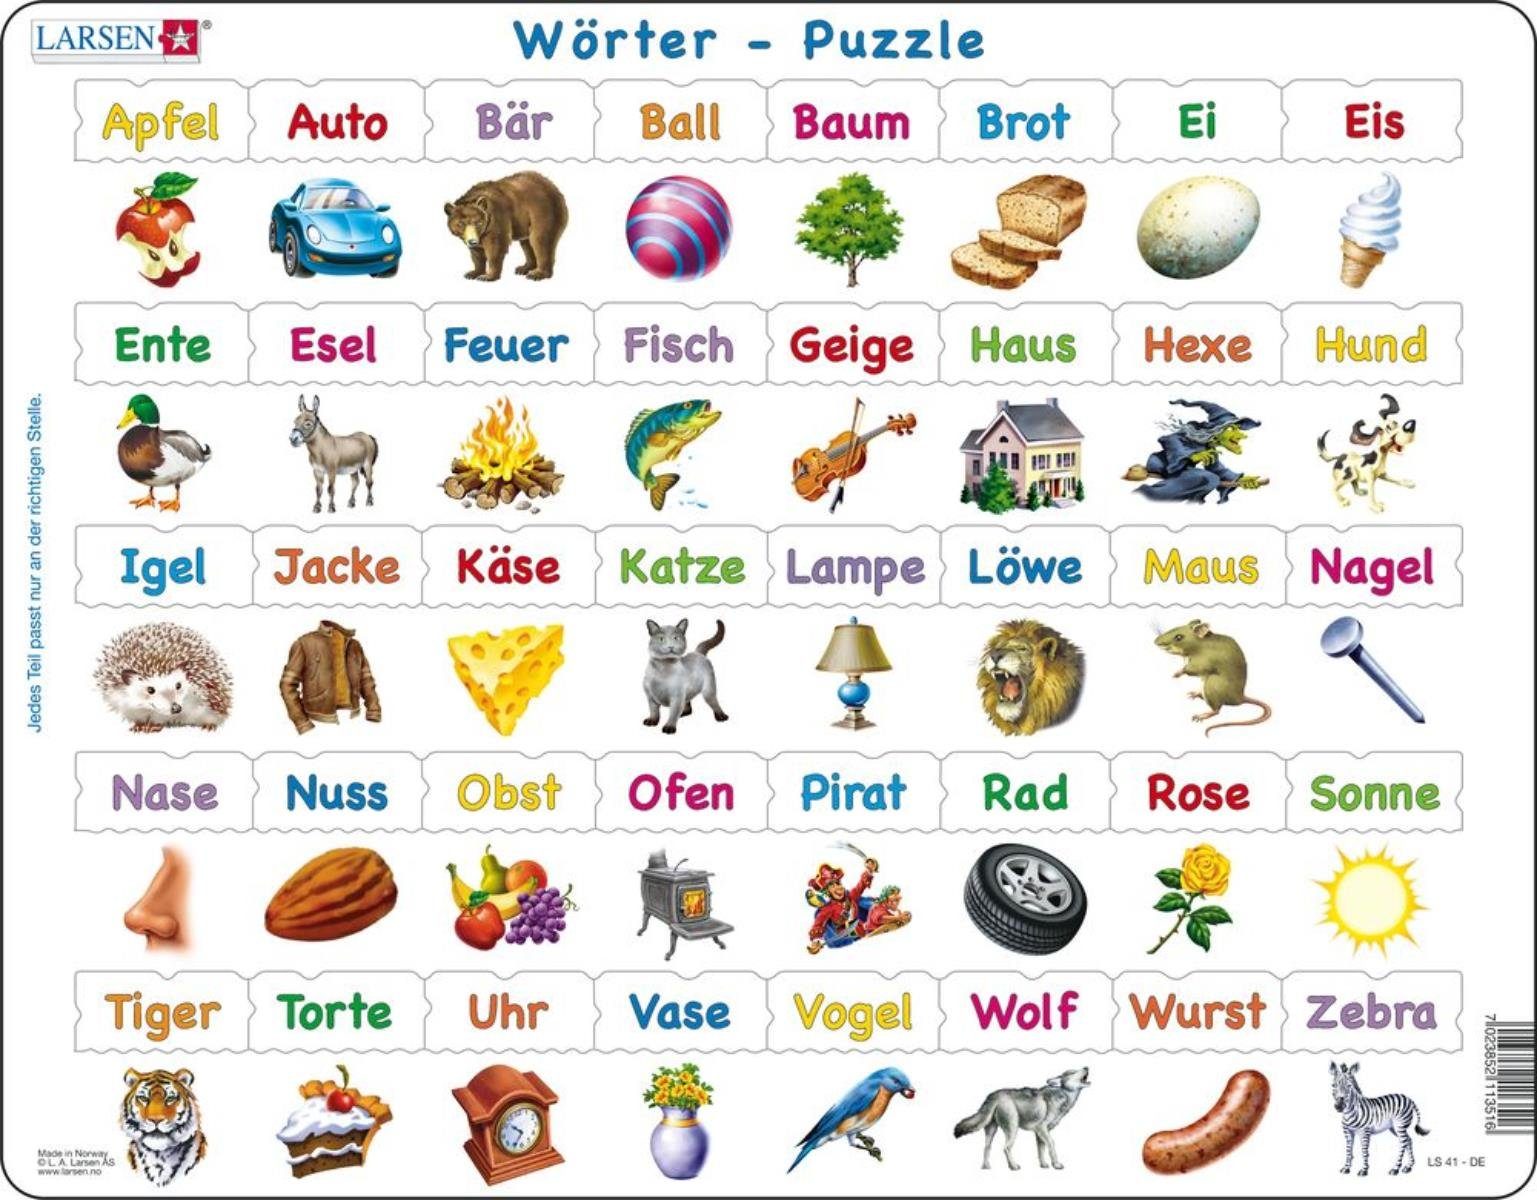 Larsen Puzzle Puzzle - Wörter, Puzzleteile